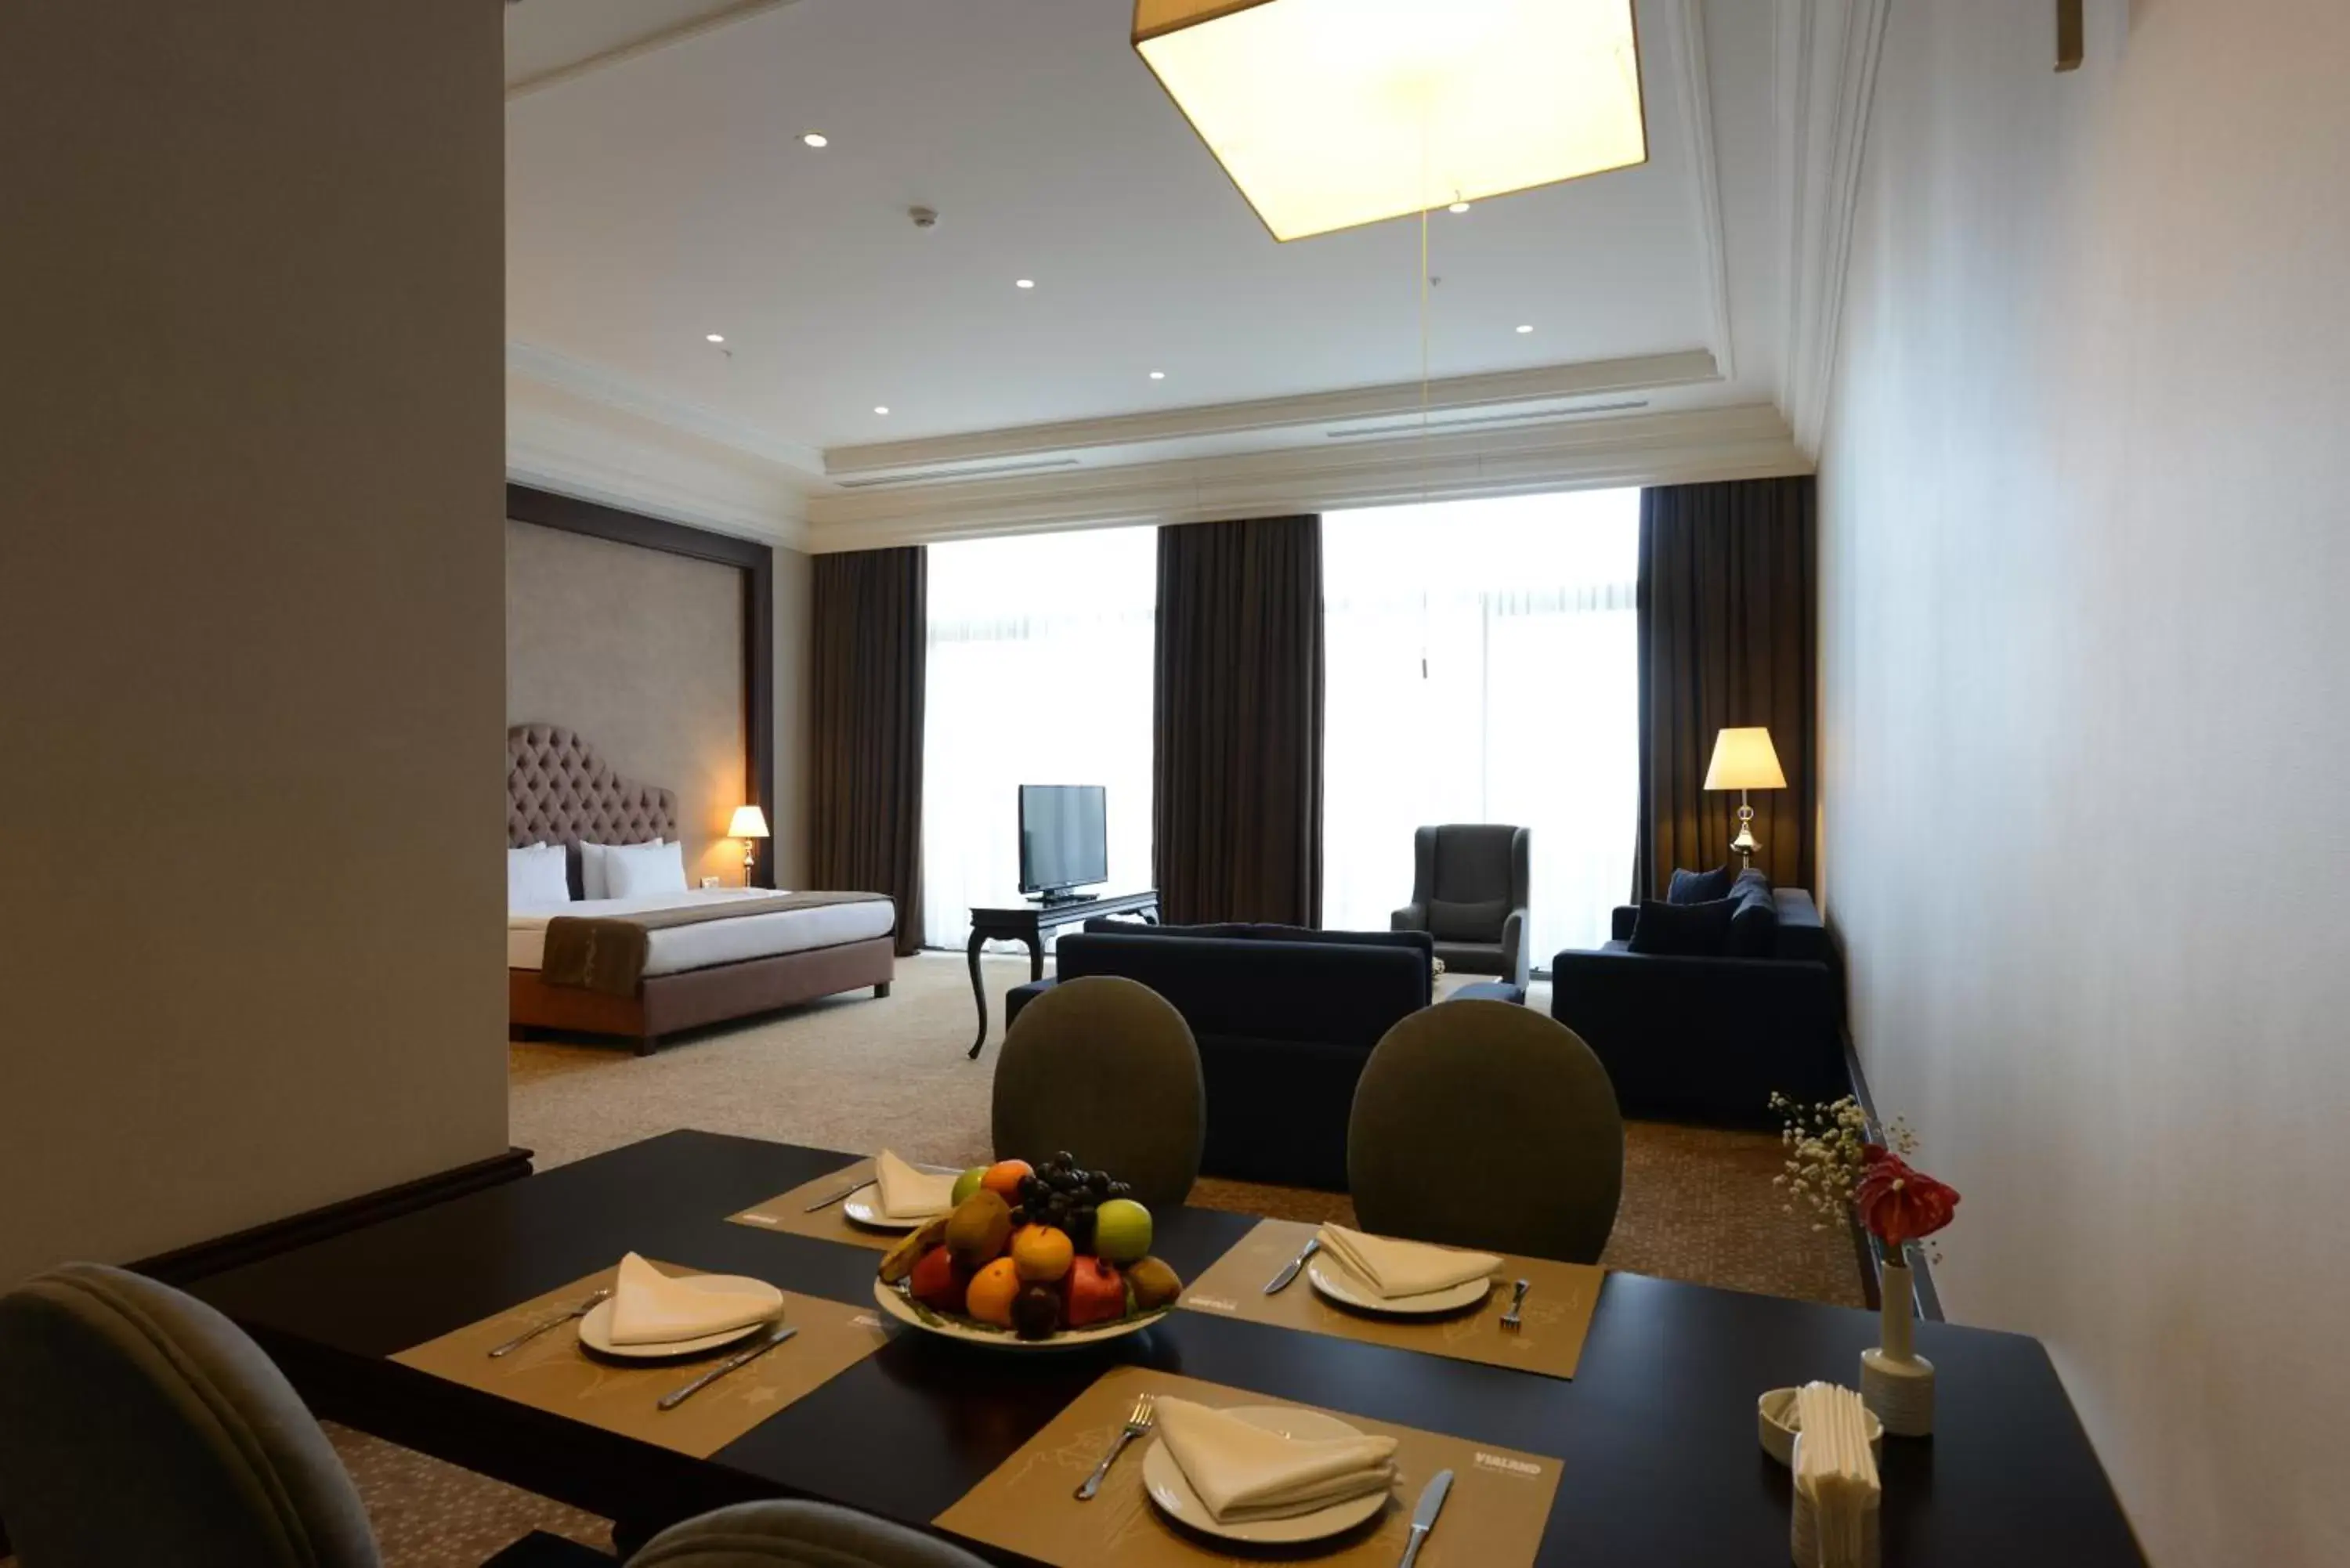 Honeymoon Suite in Vialand Palace Hotel